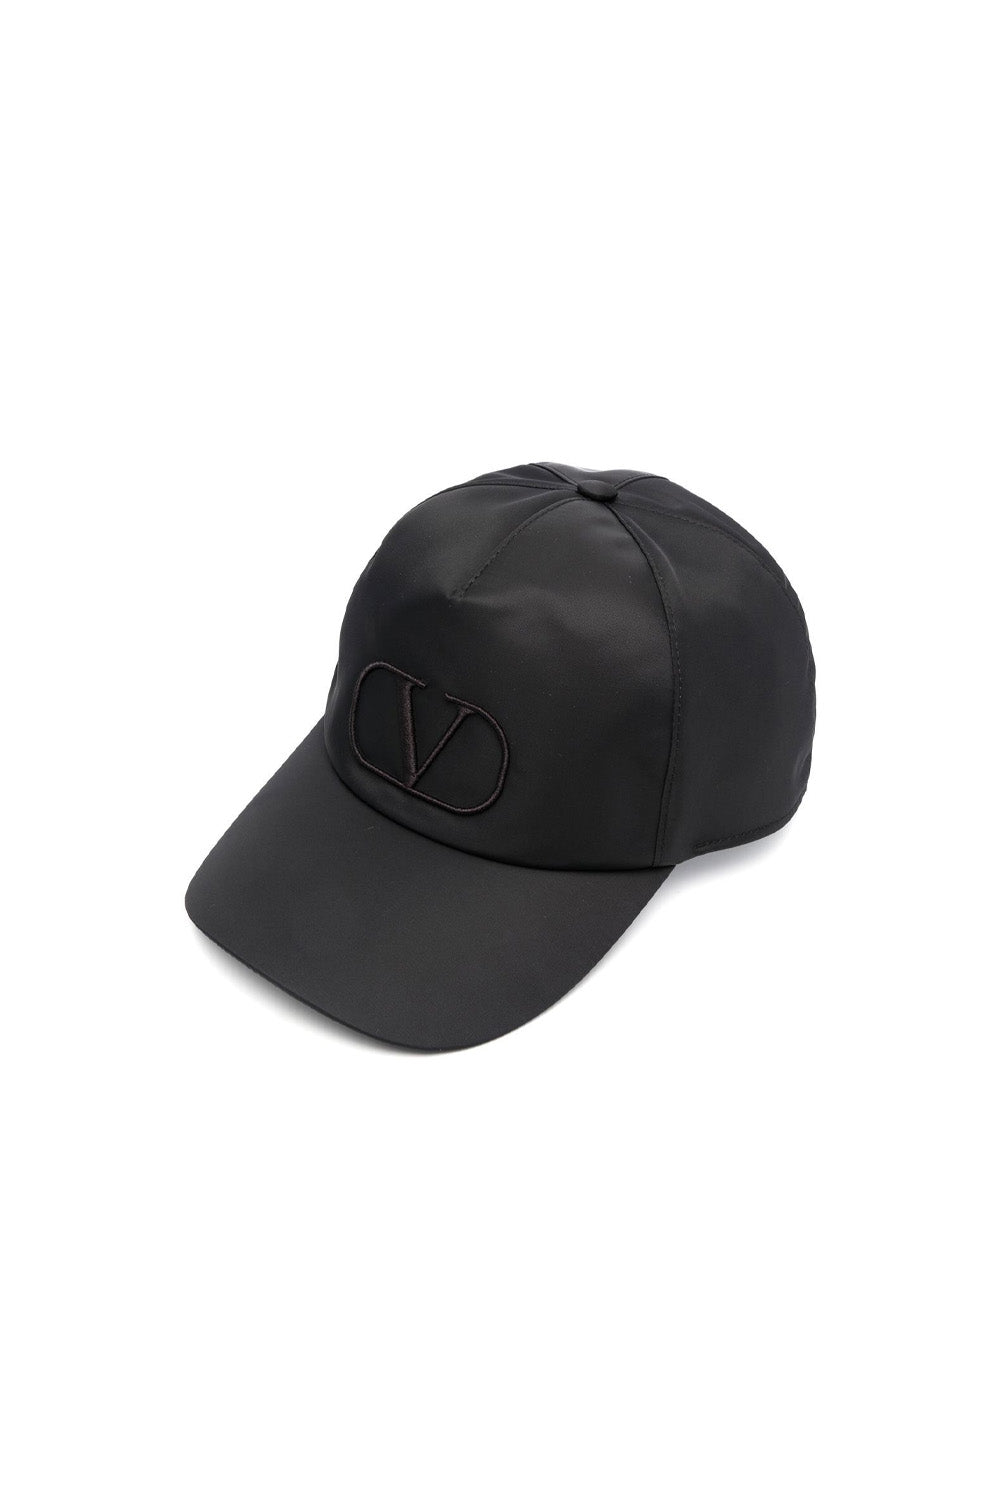 Valentino embroidered-logo baseball cap